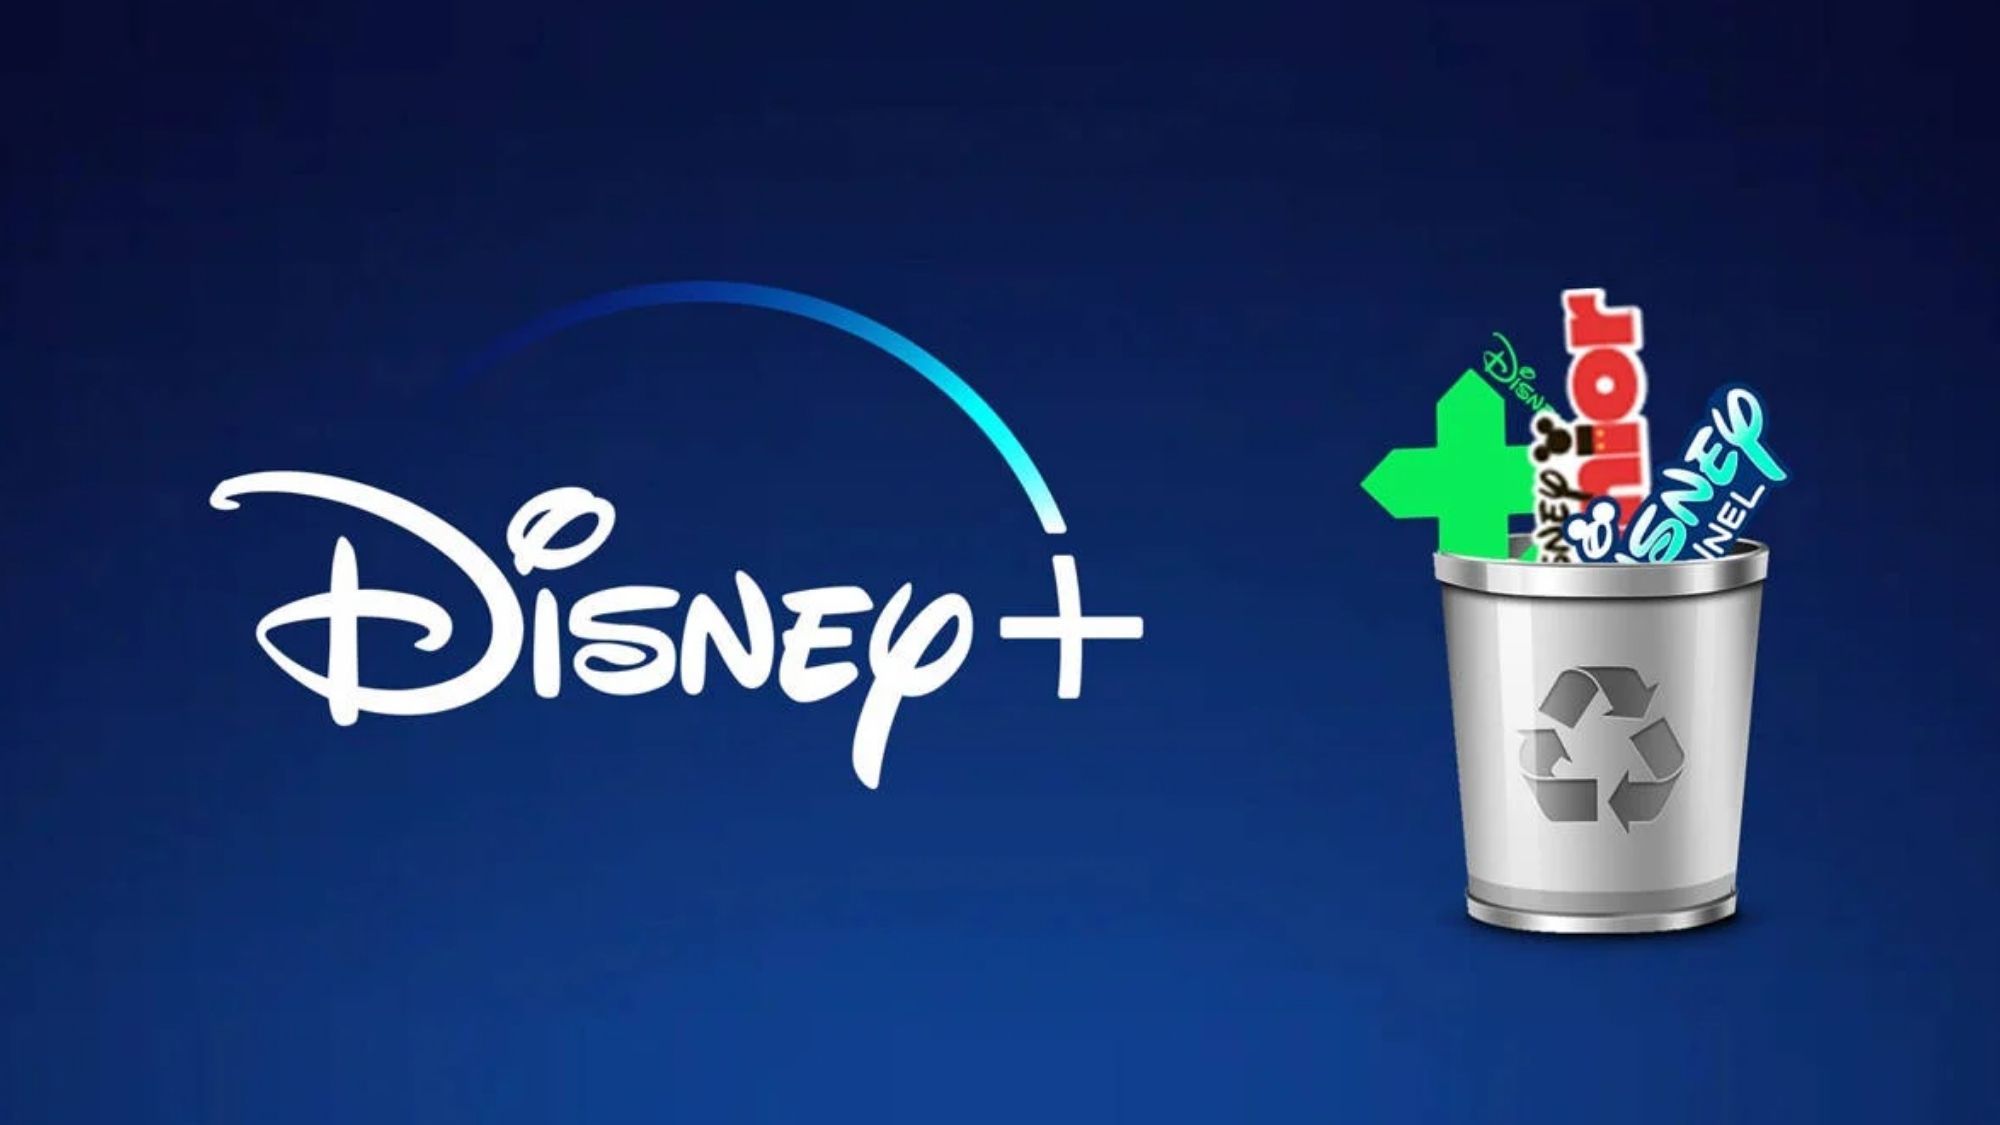  Disney channels in SE Asia to shut down